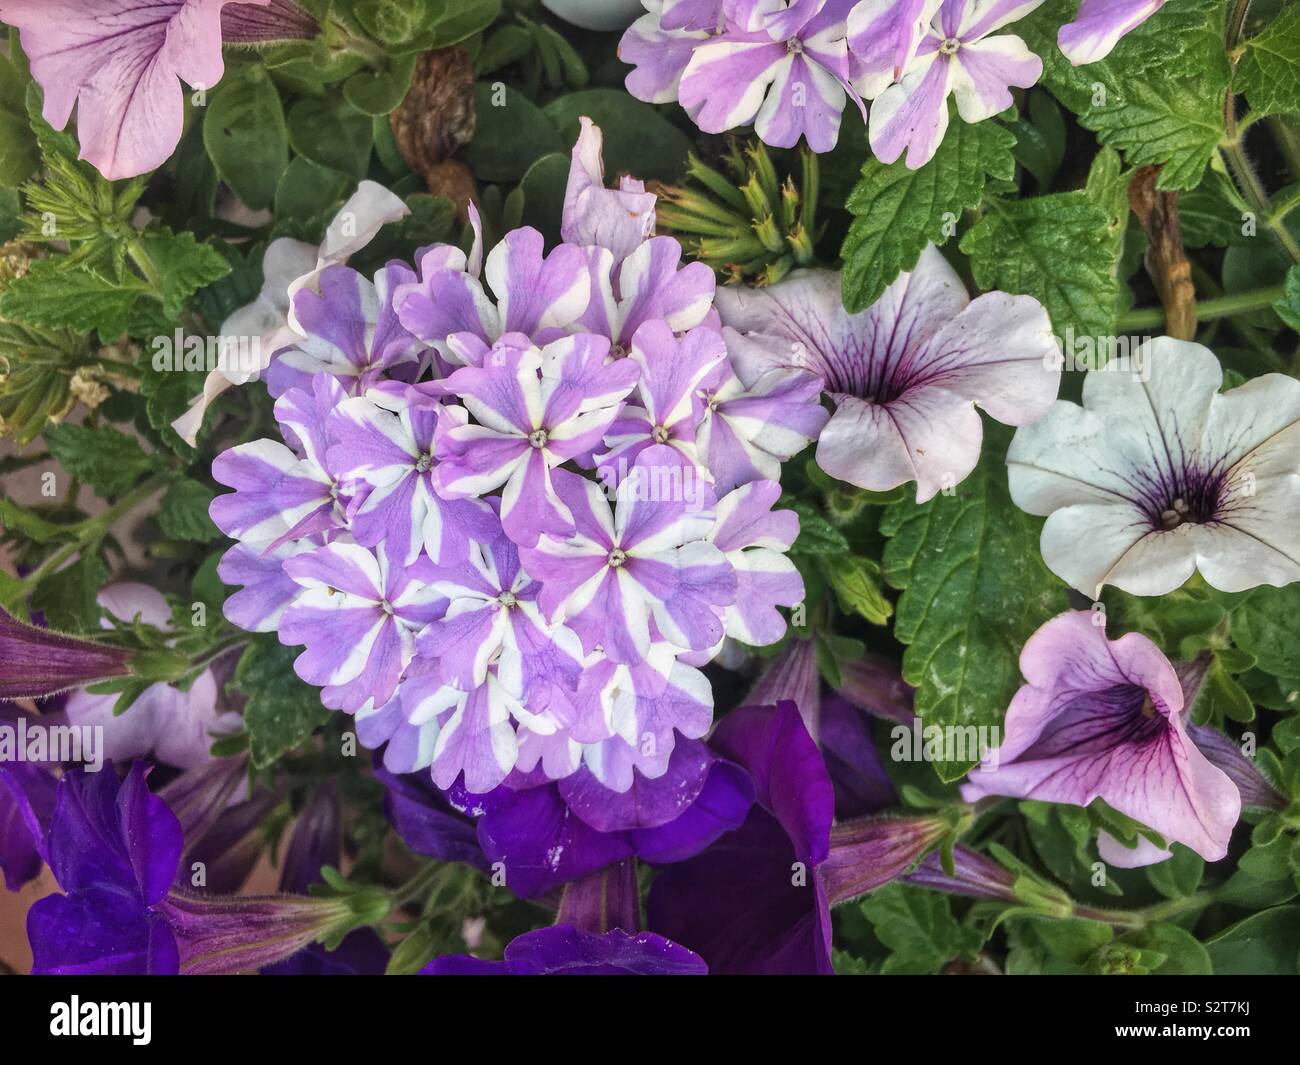 Assortment of purple flowers including striped hydrangeas and petunias. Stock Photo